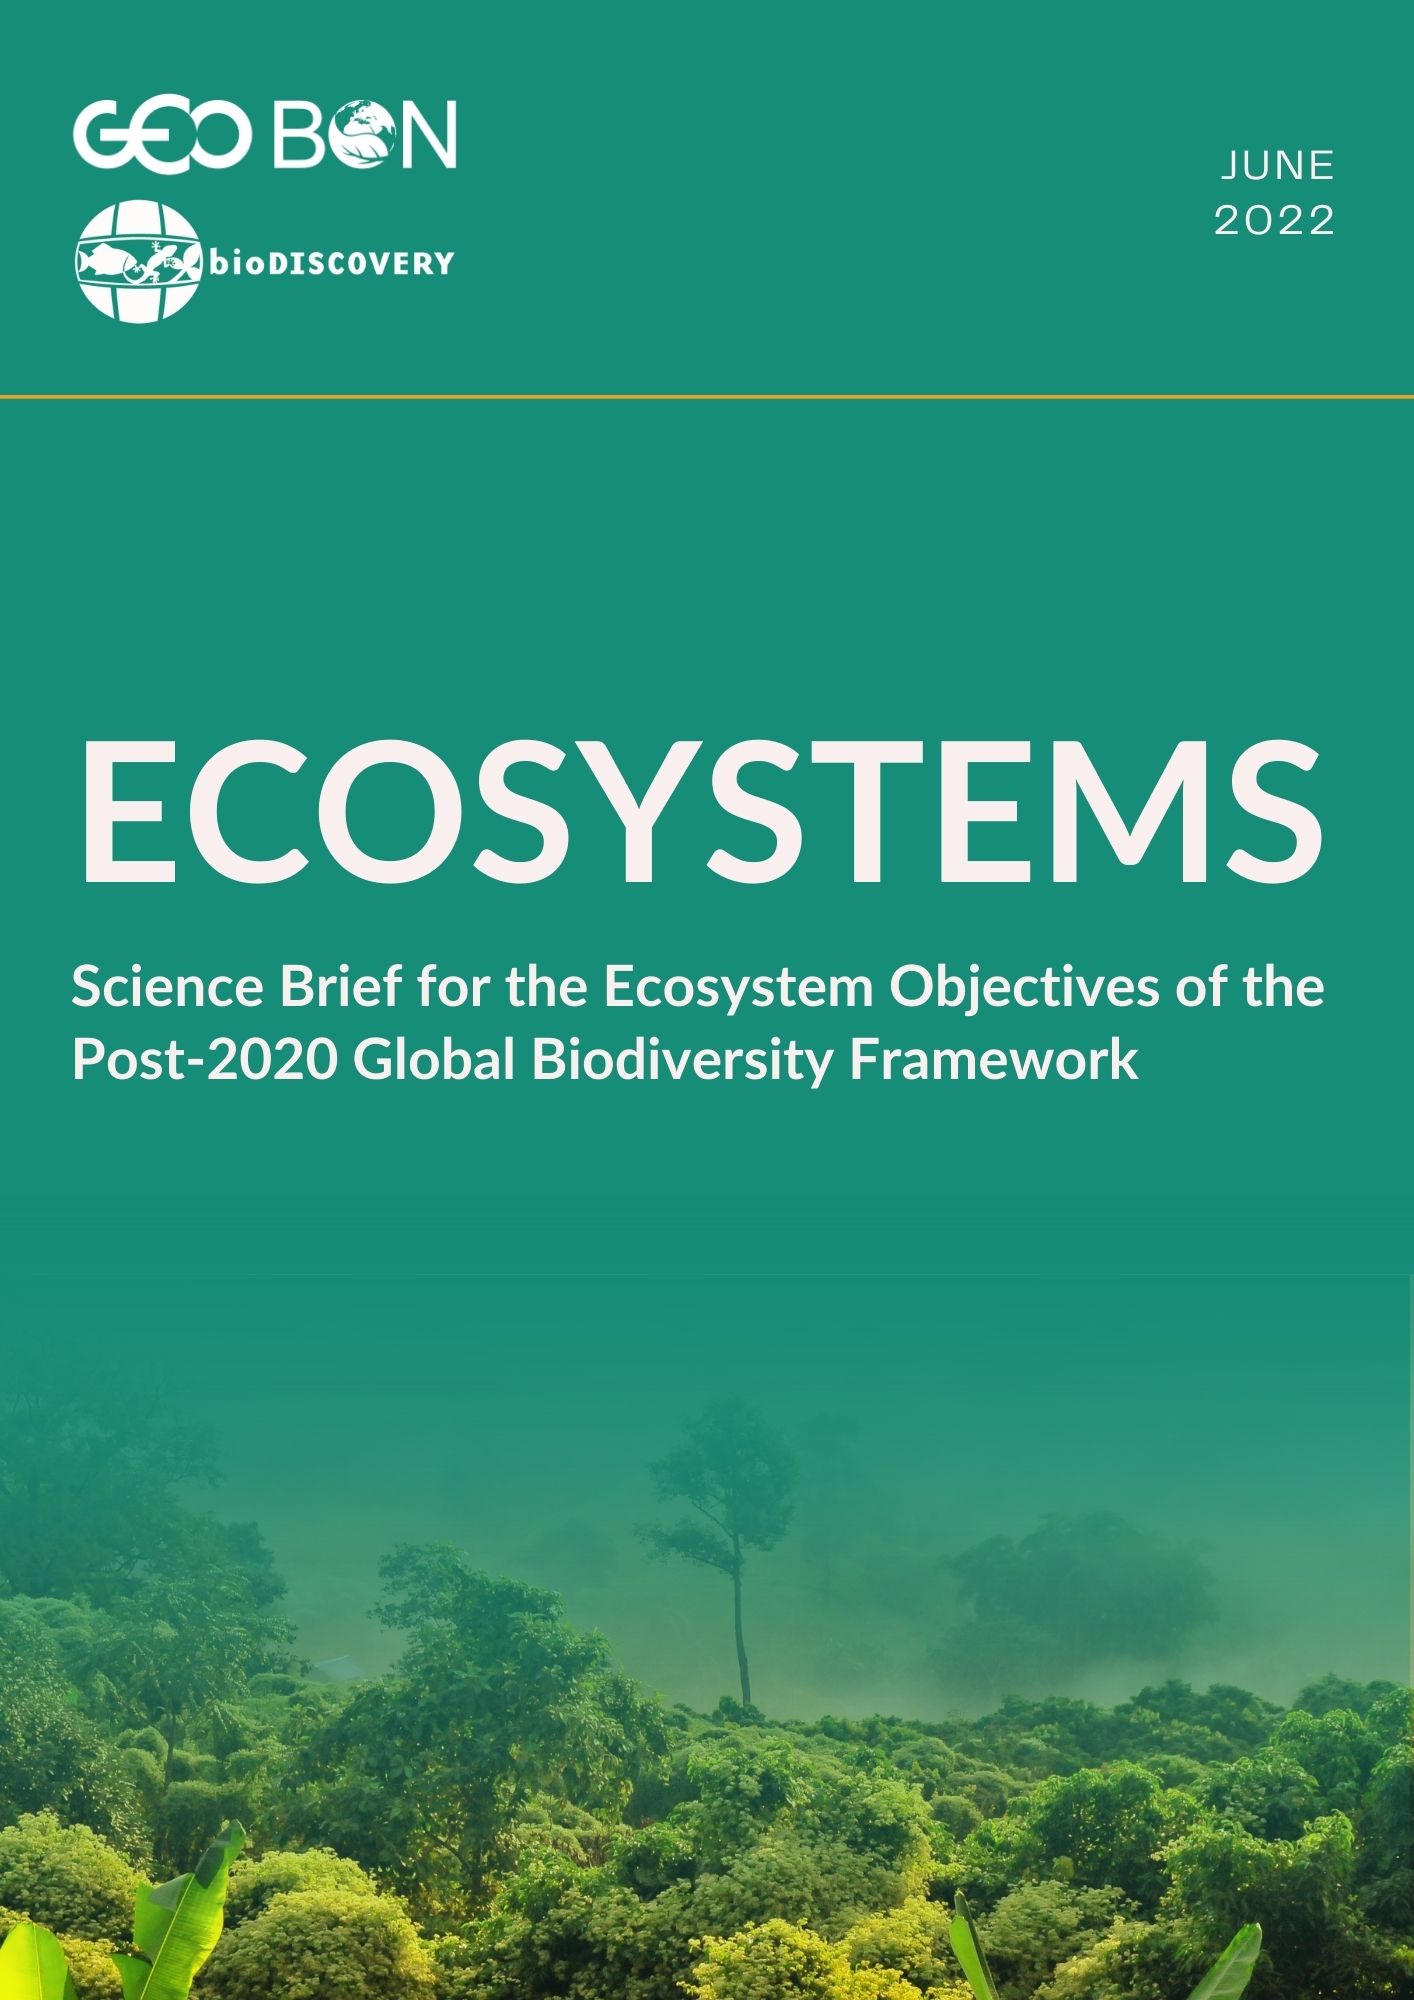 https://geobon.org/wp-content/uploads/2022/06/ecosystems_brief_cover-1.jpg